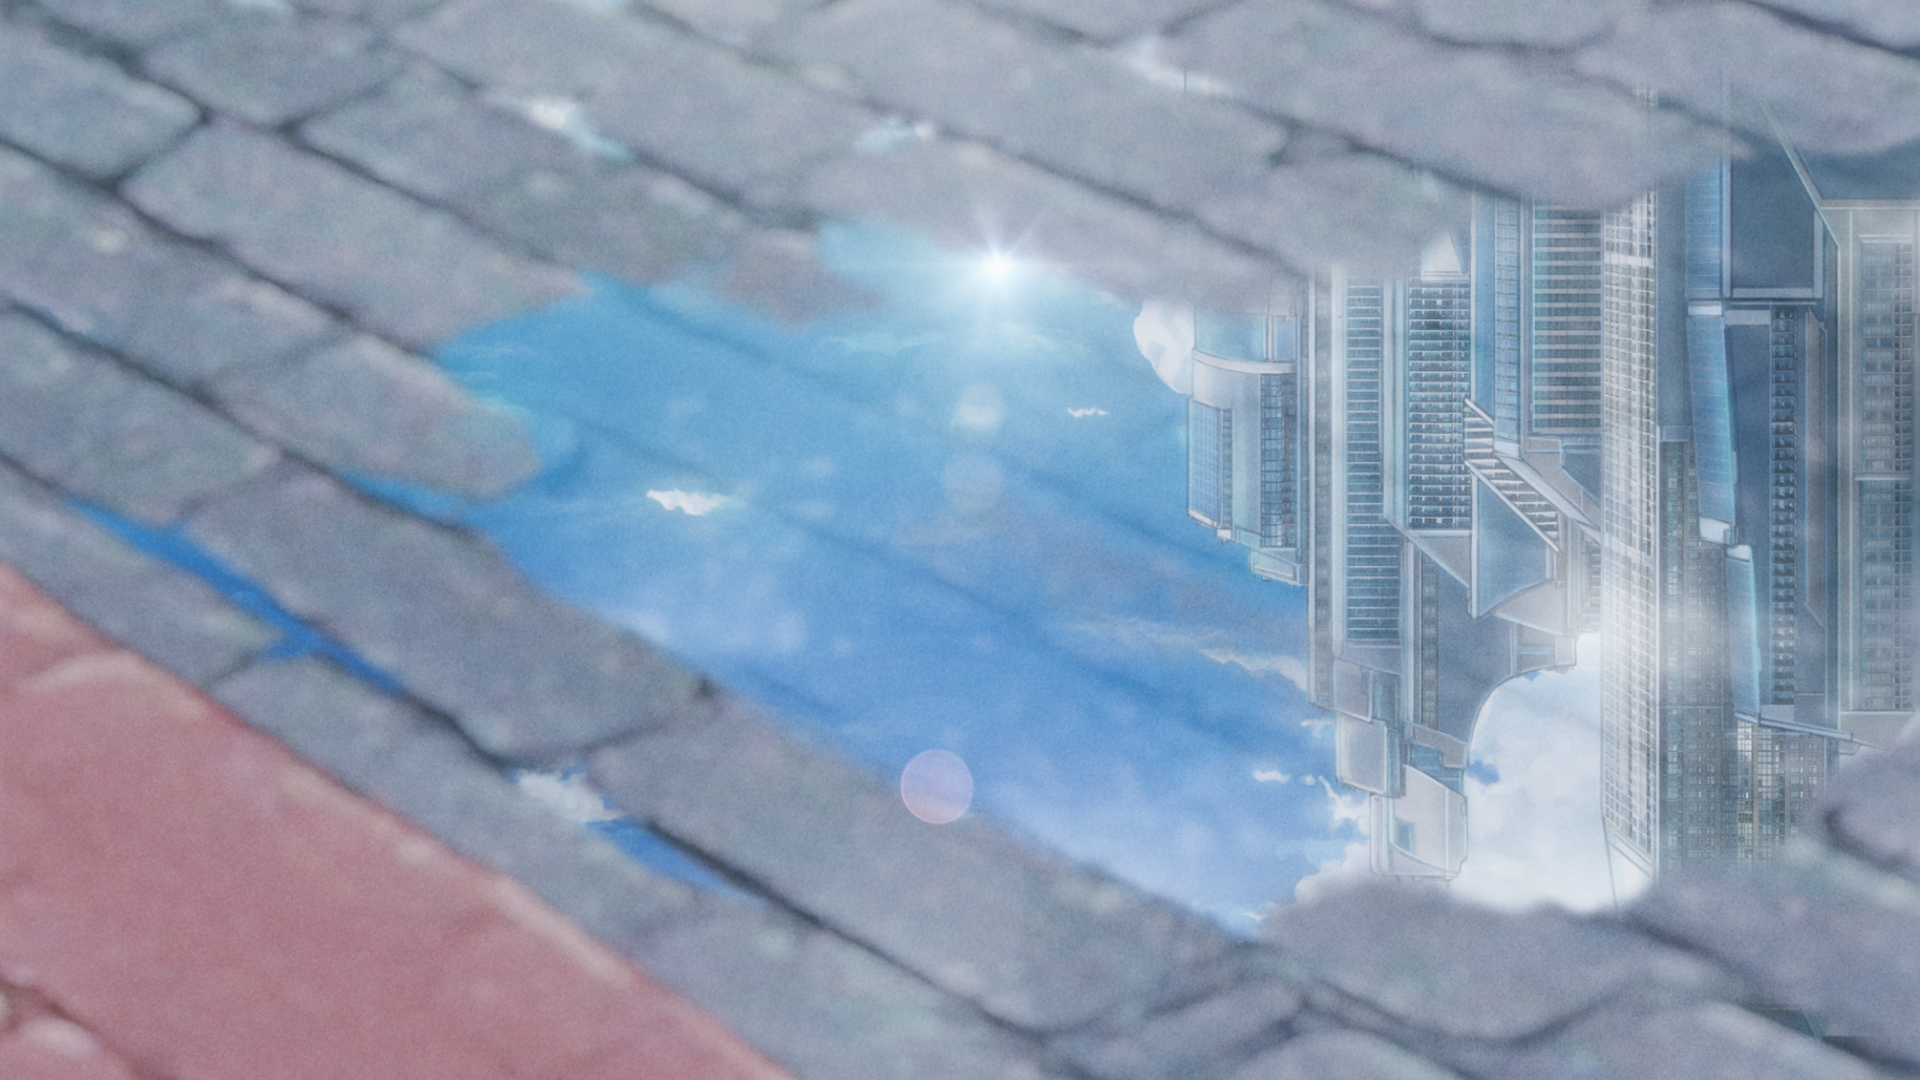 Outdoors Digital Art Anime City Fantasy City Sky Anime Building Cityscape Street After The Rain Refl 1920x1080